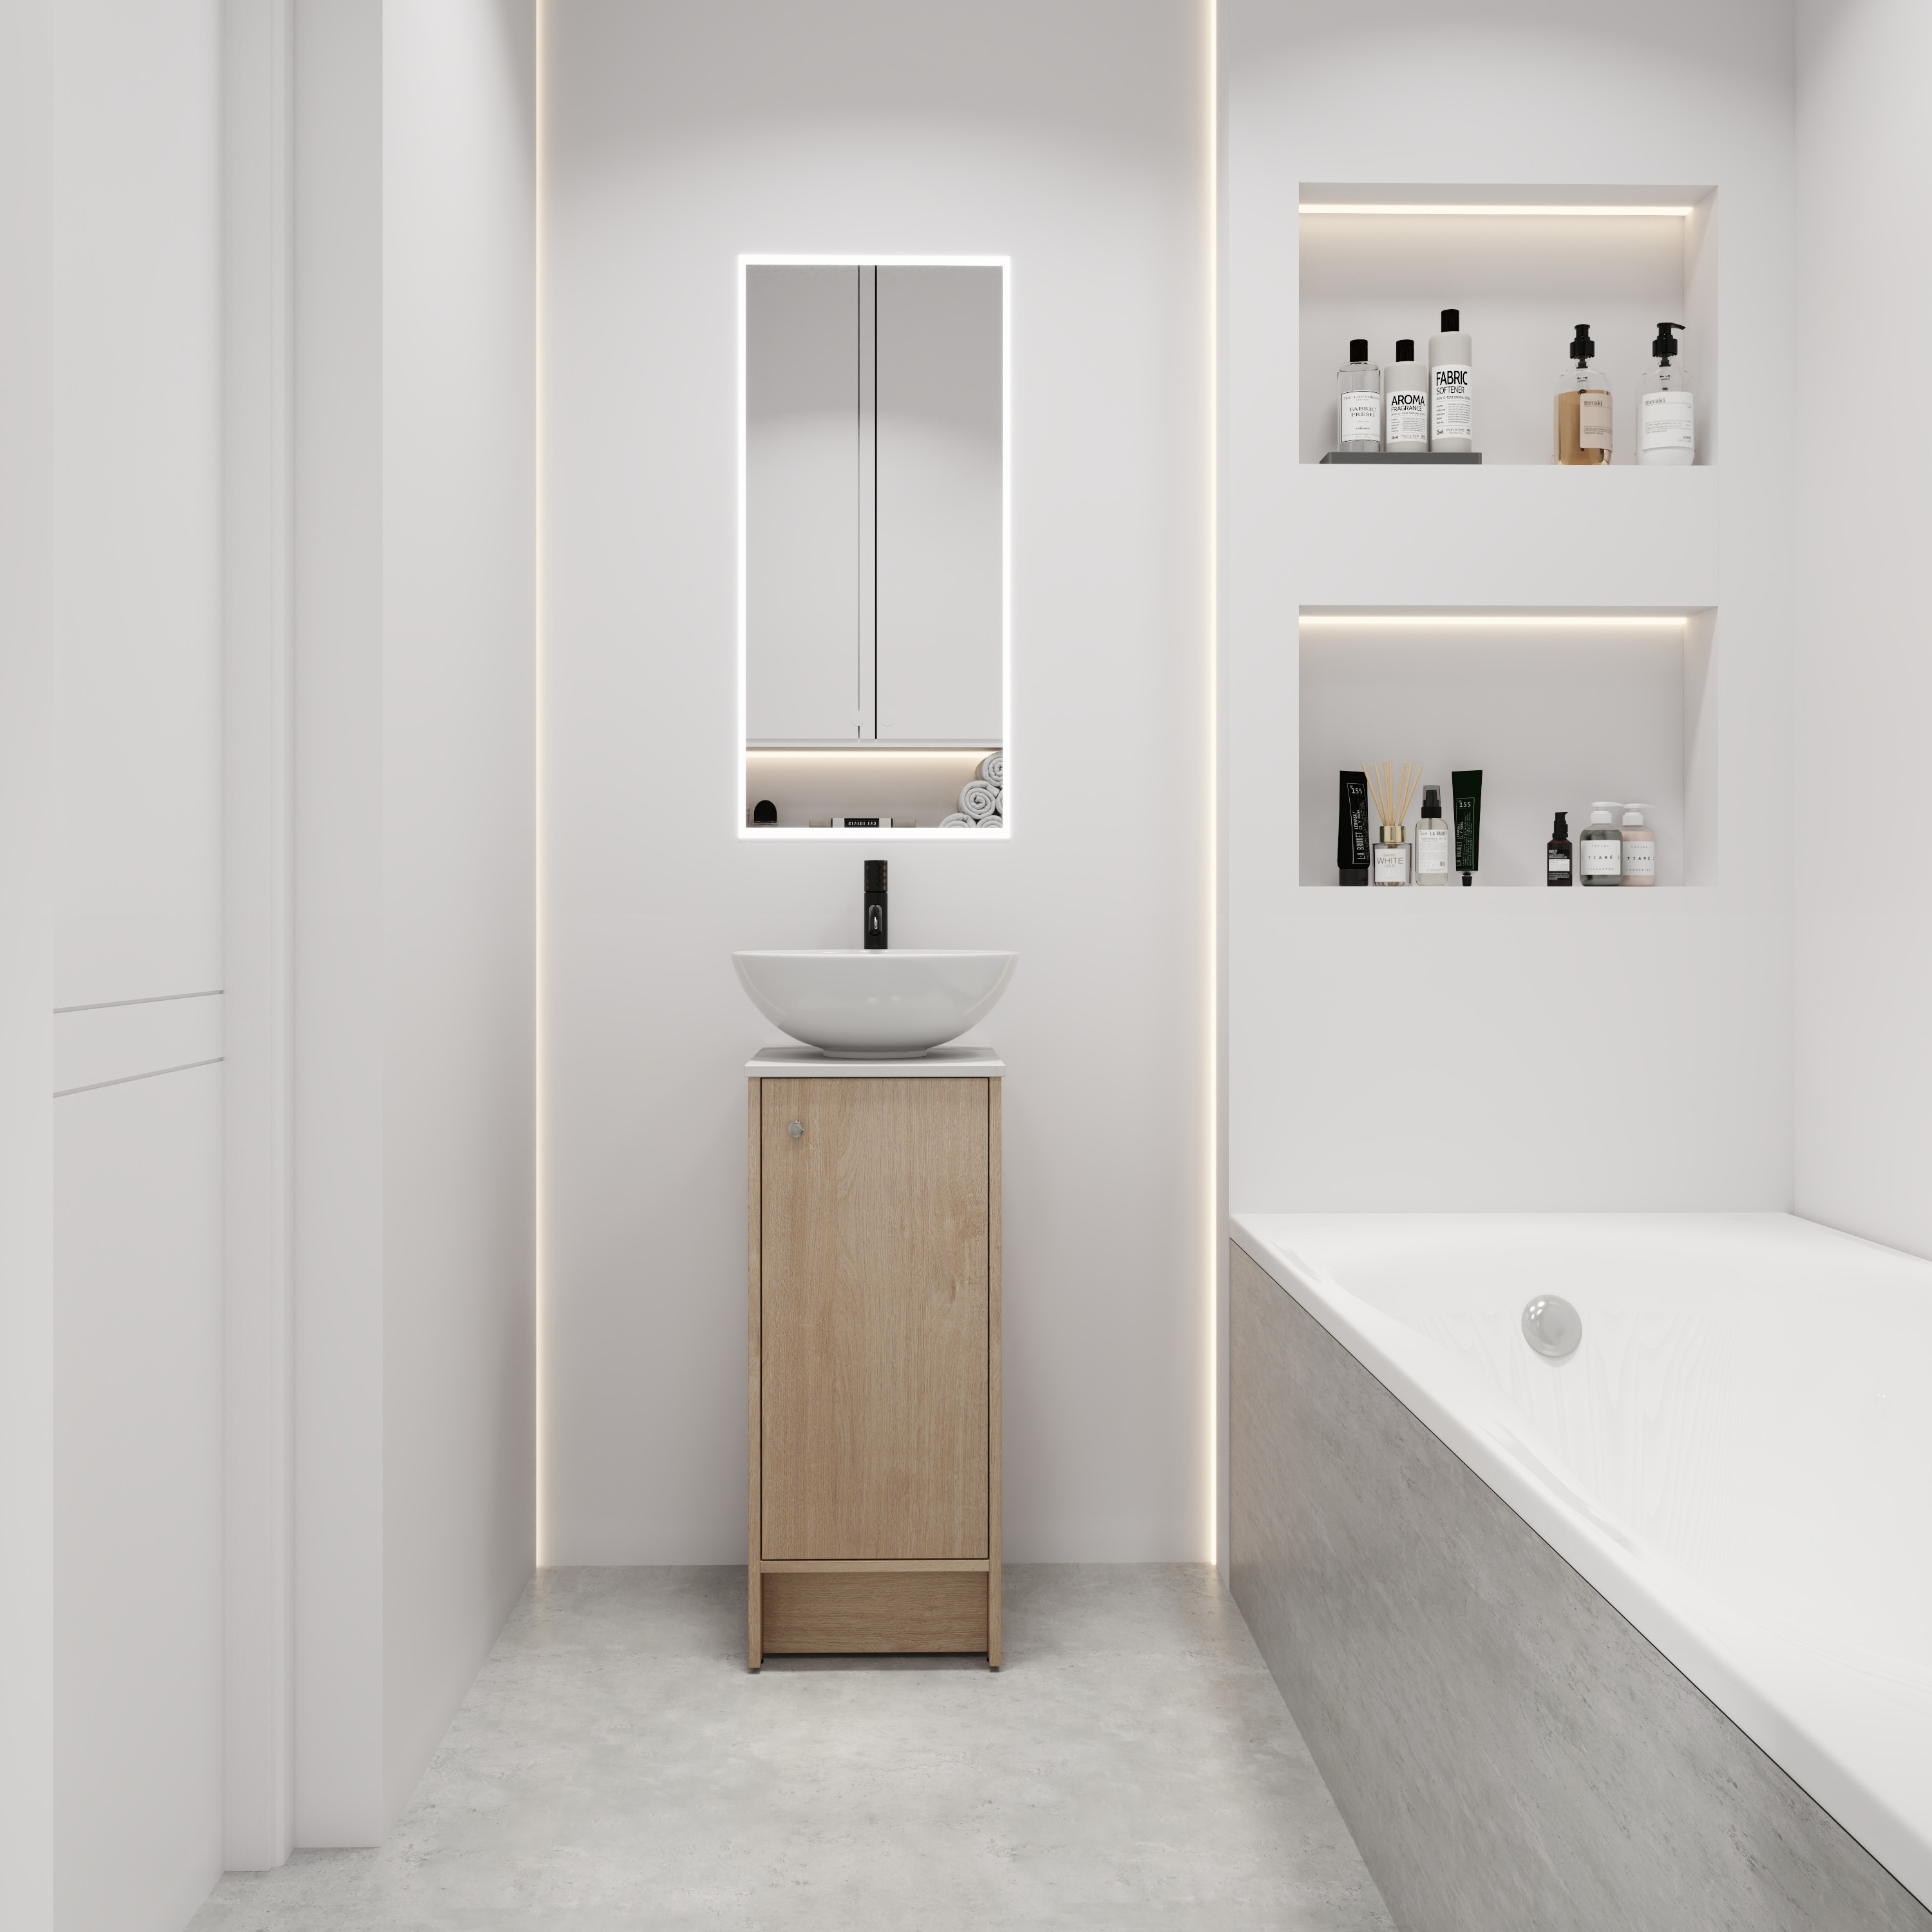 https://ak1.ostkcdn.com/images/products/is/images/direct/045f32f69f595c4fff7bc1b391921b2d65de0dd9/13%22-Freestanding-Bathroom-Vanity-with-Ceramic-Sink%2C-Soft-Close-Door%2C-and-Shelf-in-Light-Oak%2C-Elegant-Bathroom-Storage-Solution.jpg